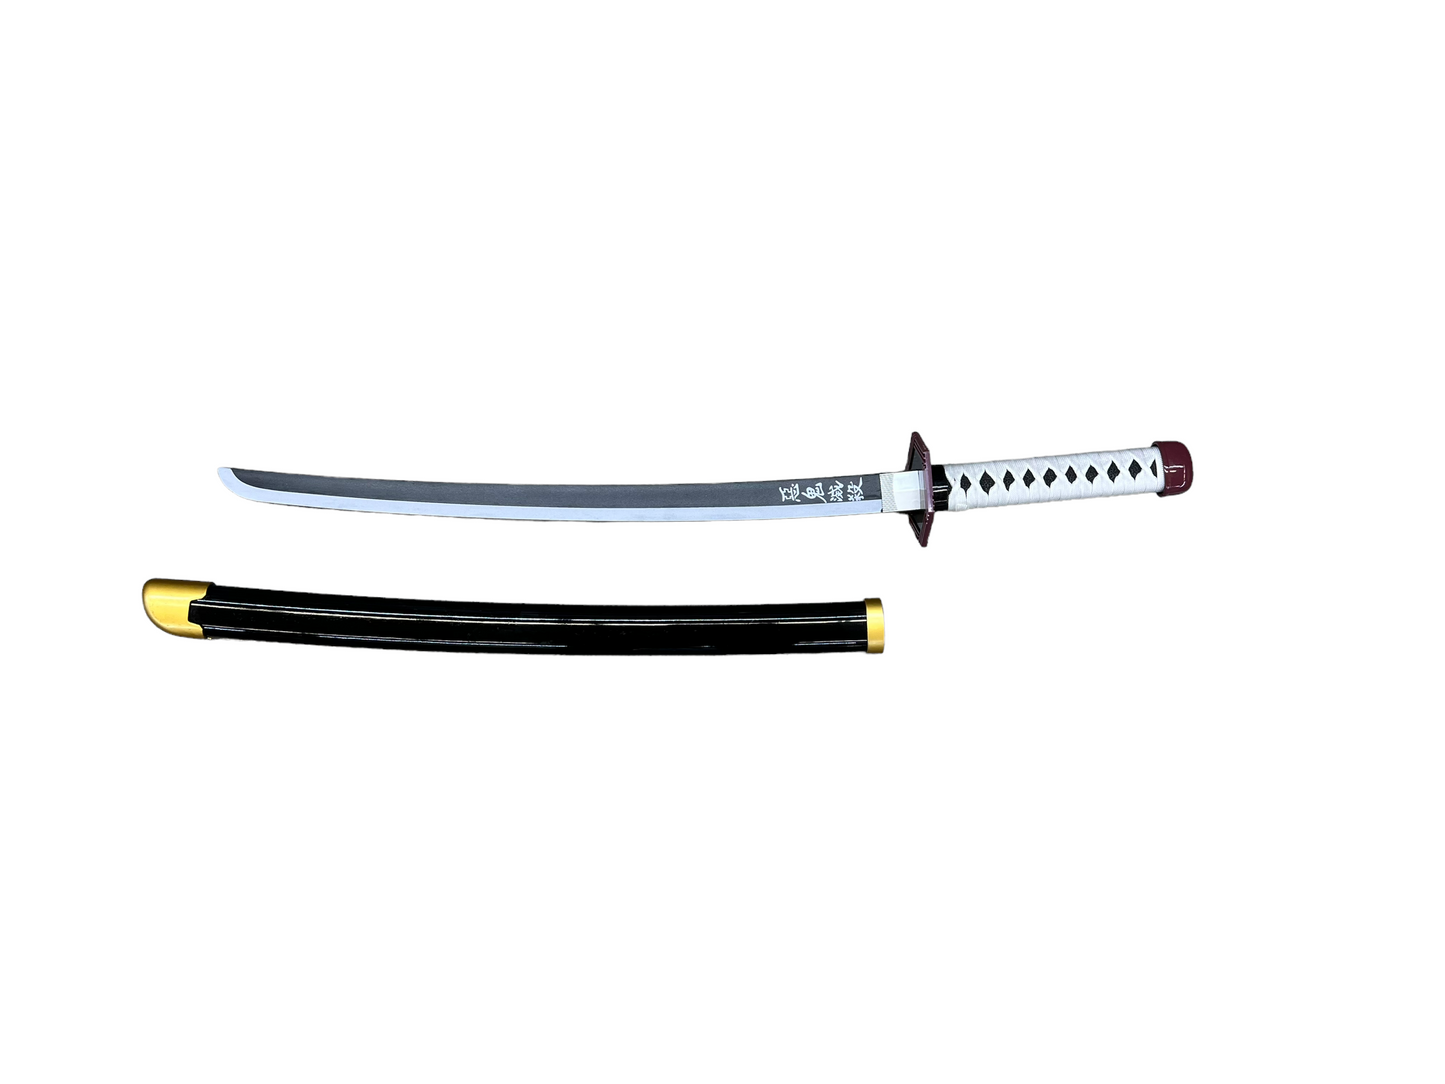 Slayer Fantasy Bamboo 31" Sword - Choose your sword